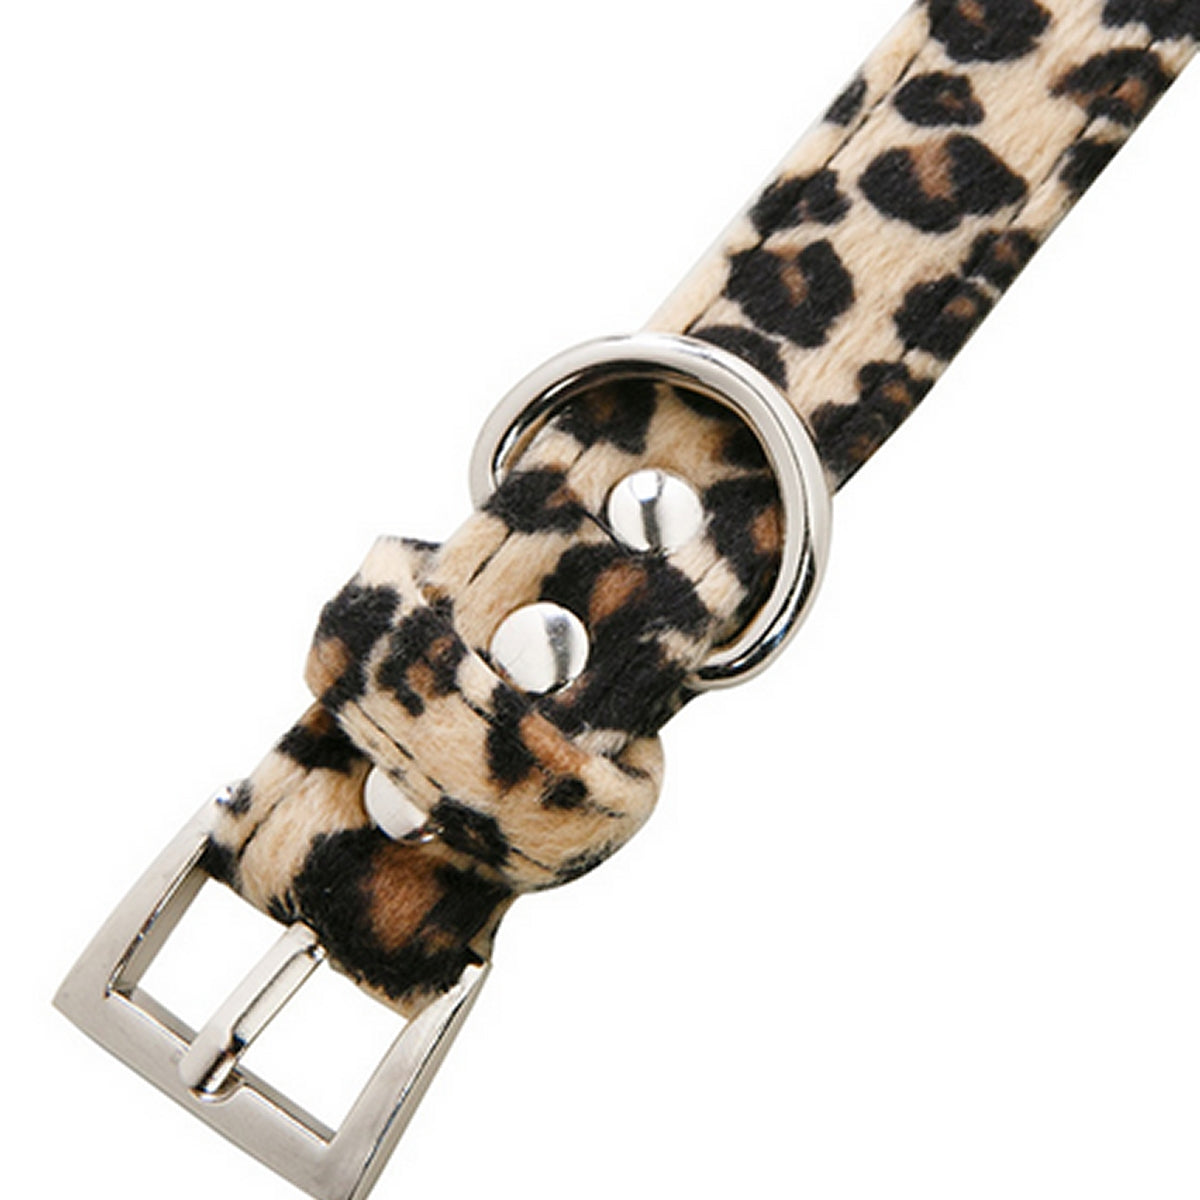 Leopard Print Dog Collar & Lead Sets